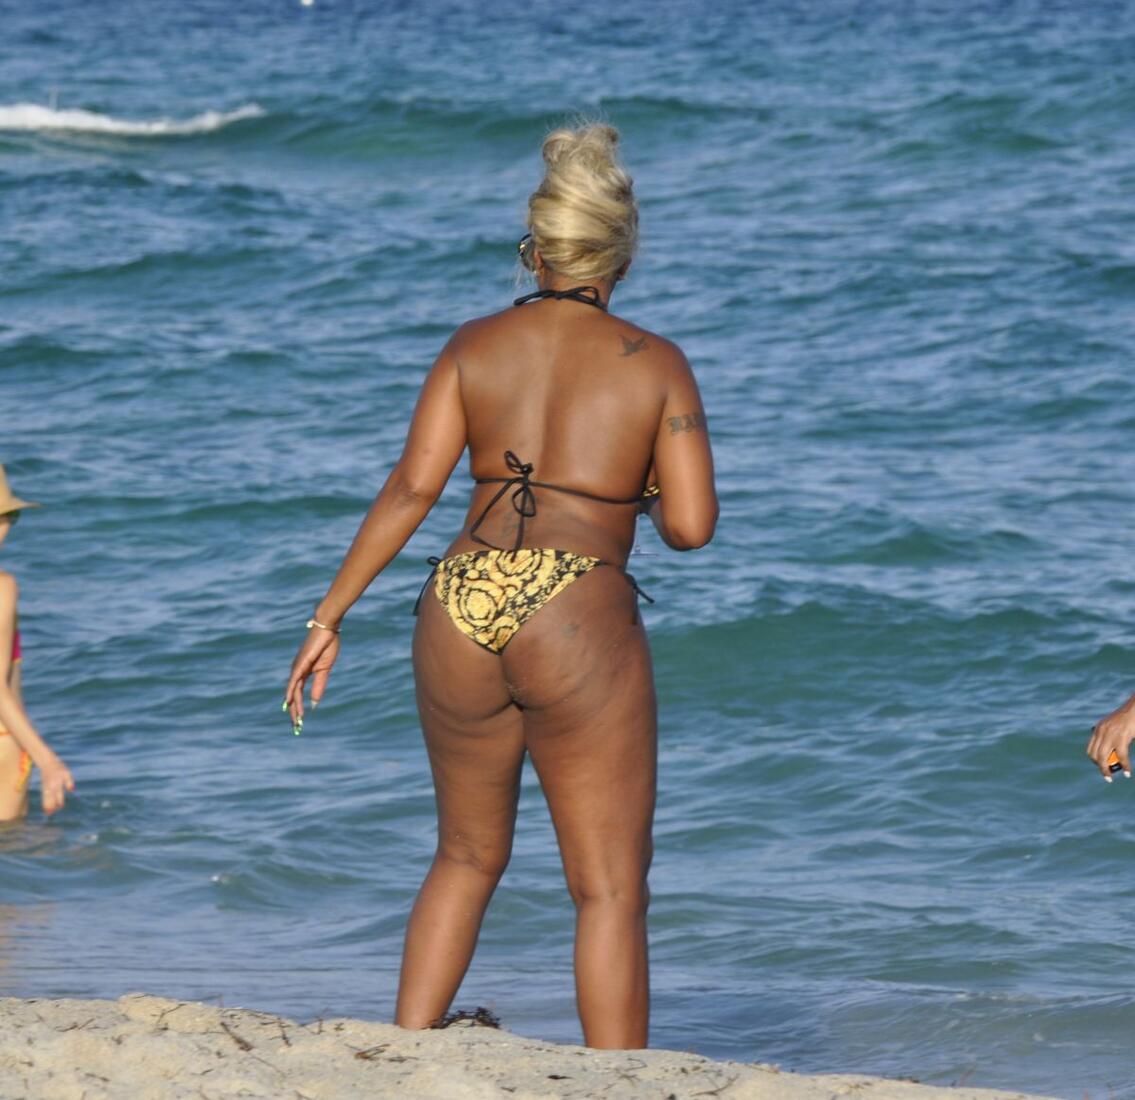 mary-j.-blige-in-bikini-at-a-beach-in-miami-12-11-2021-4.jpg.